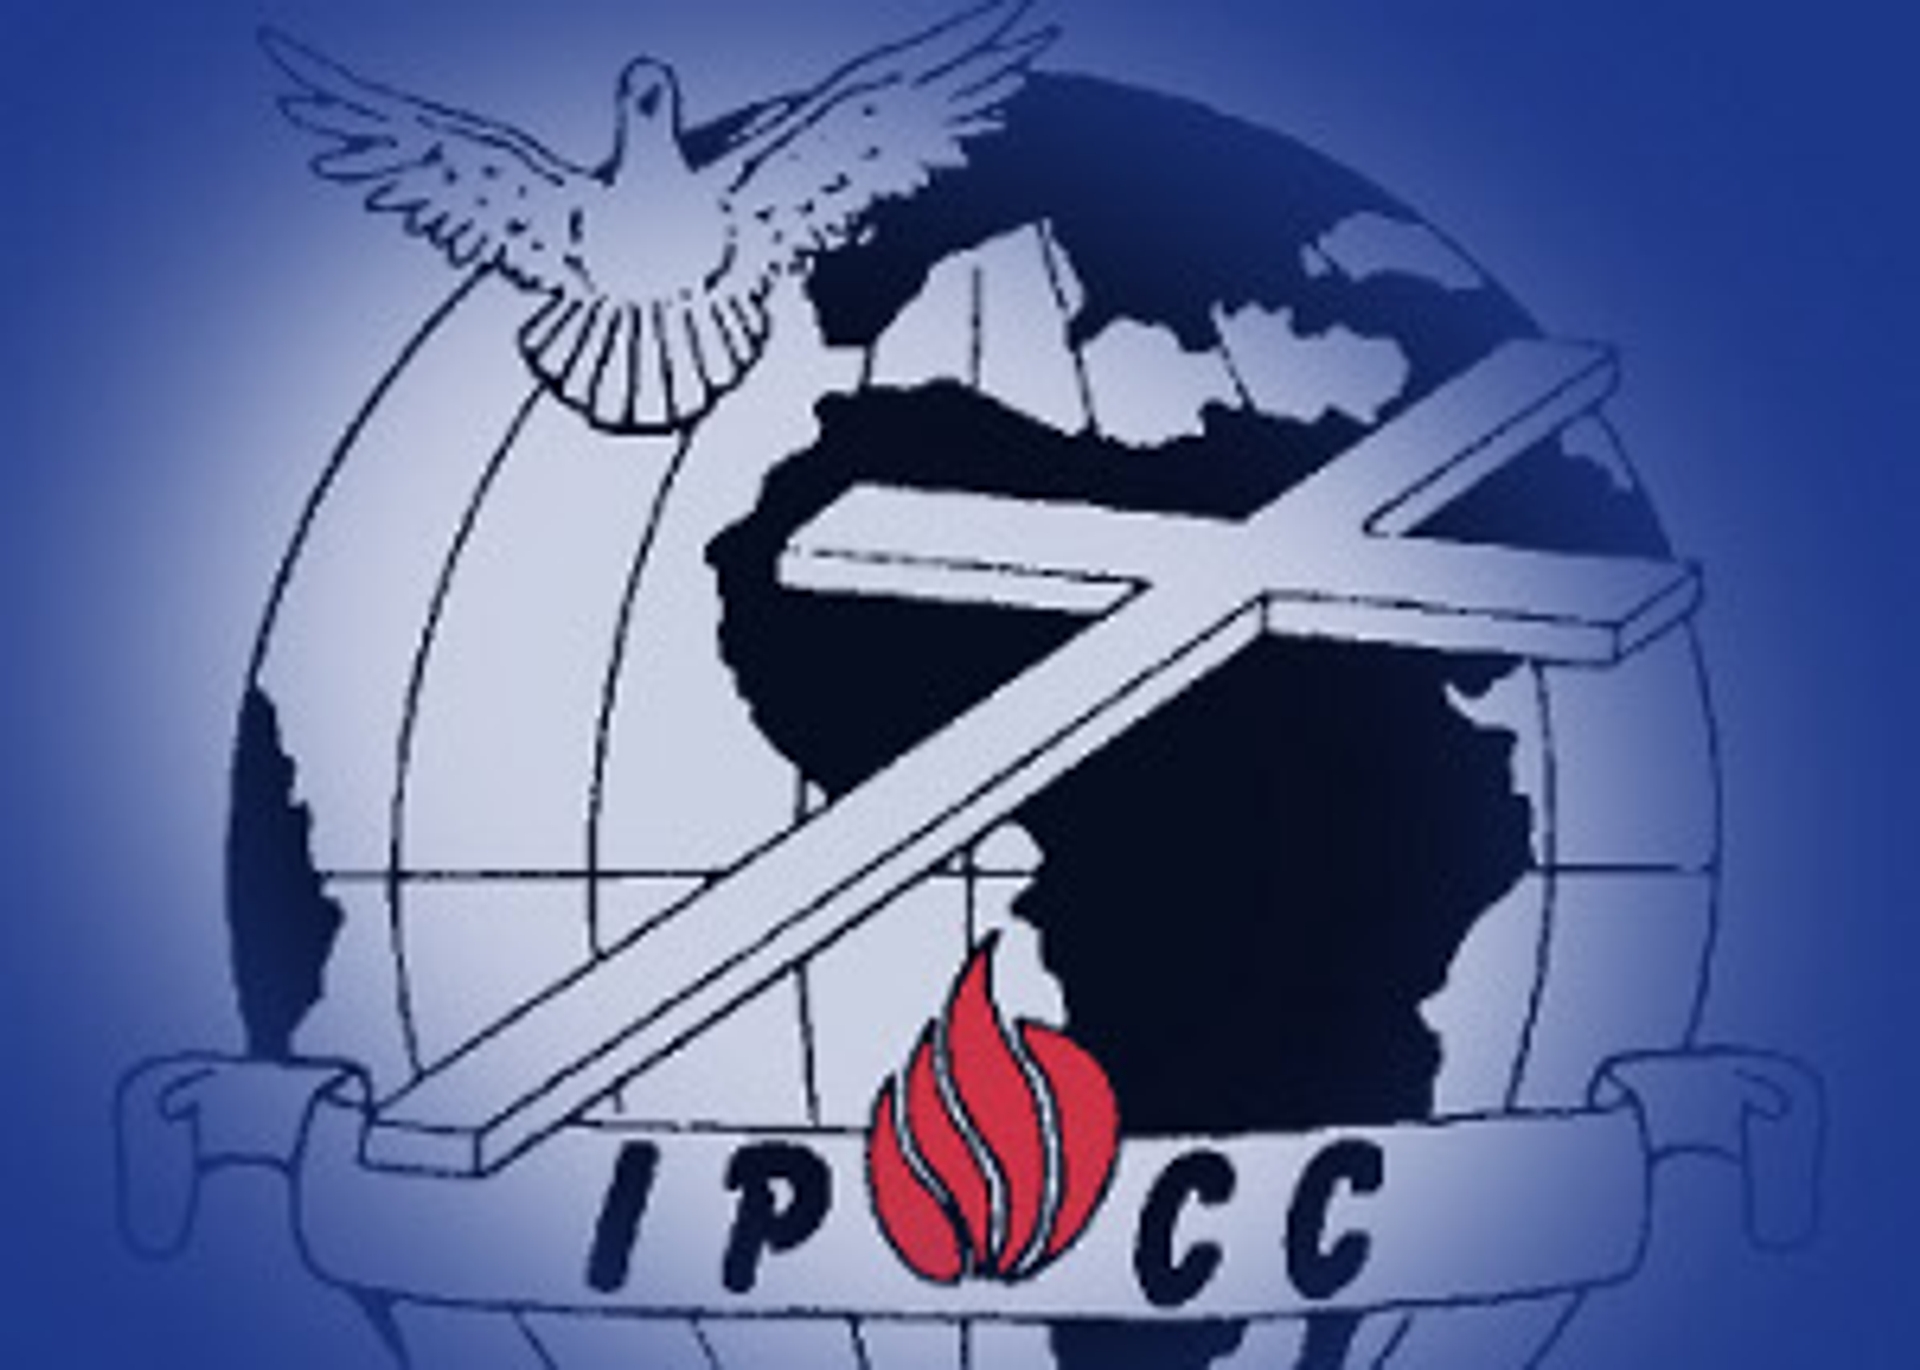 RTEmagicC_ipcc-logo.jpg